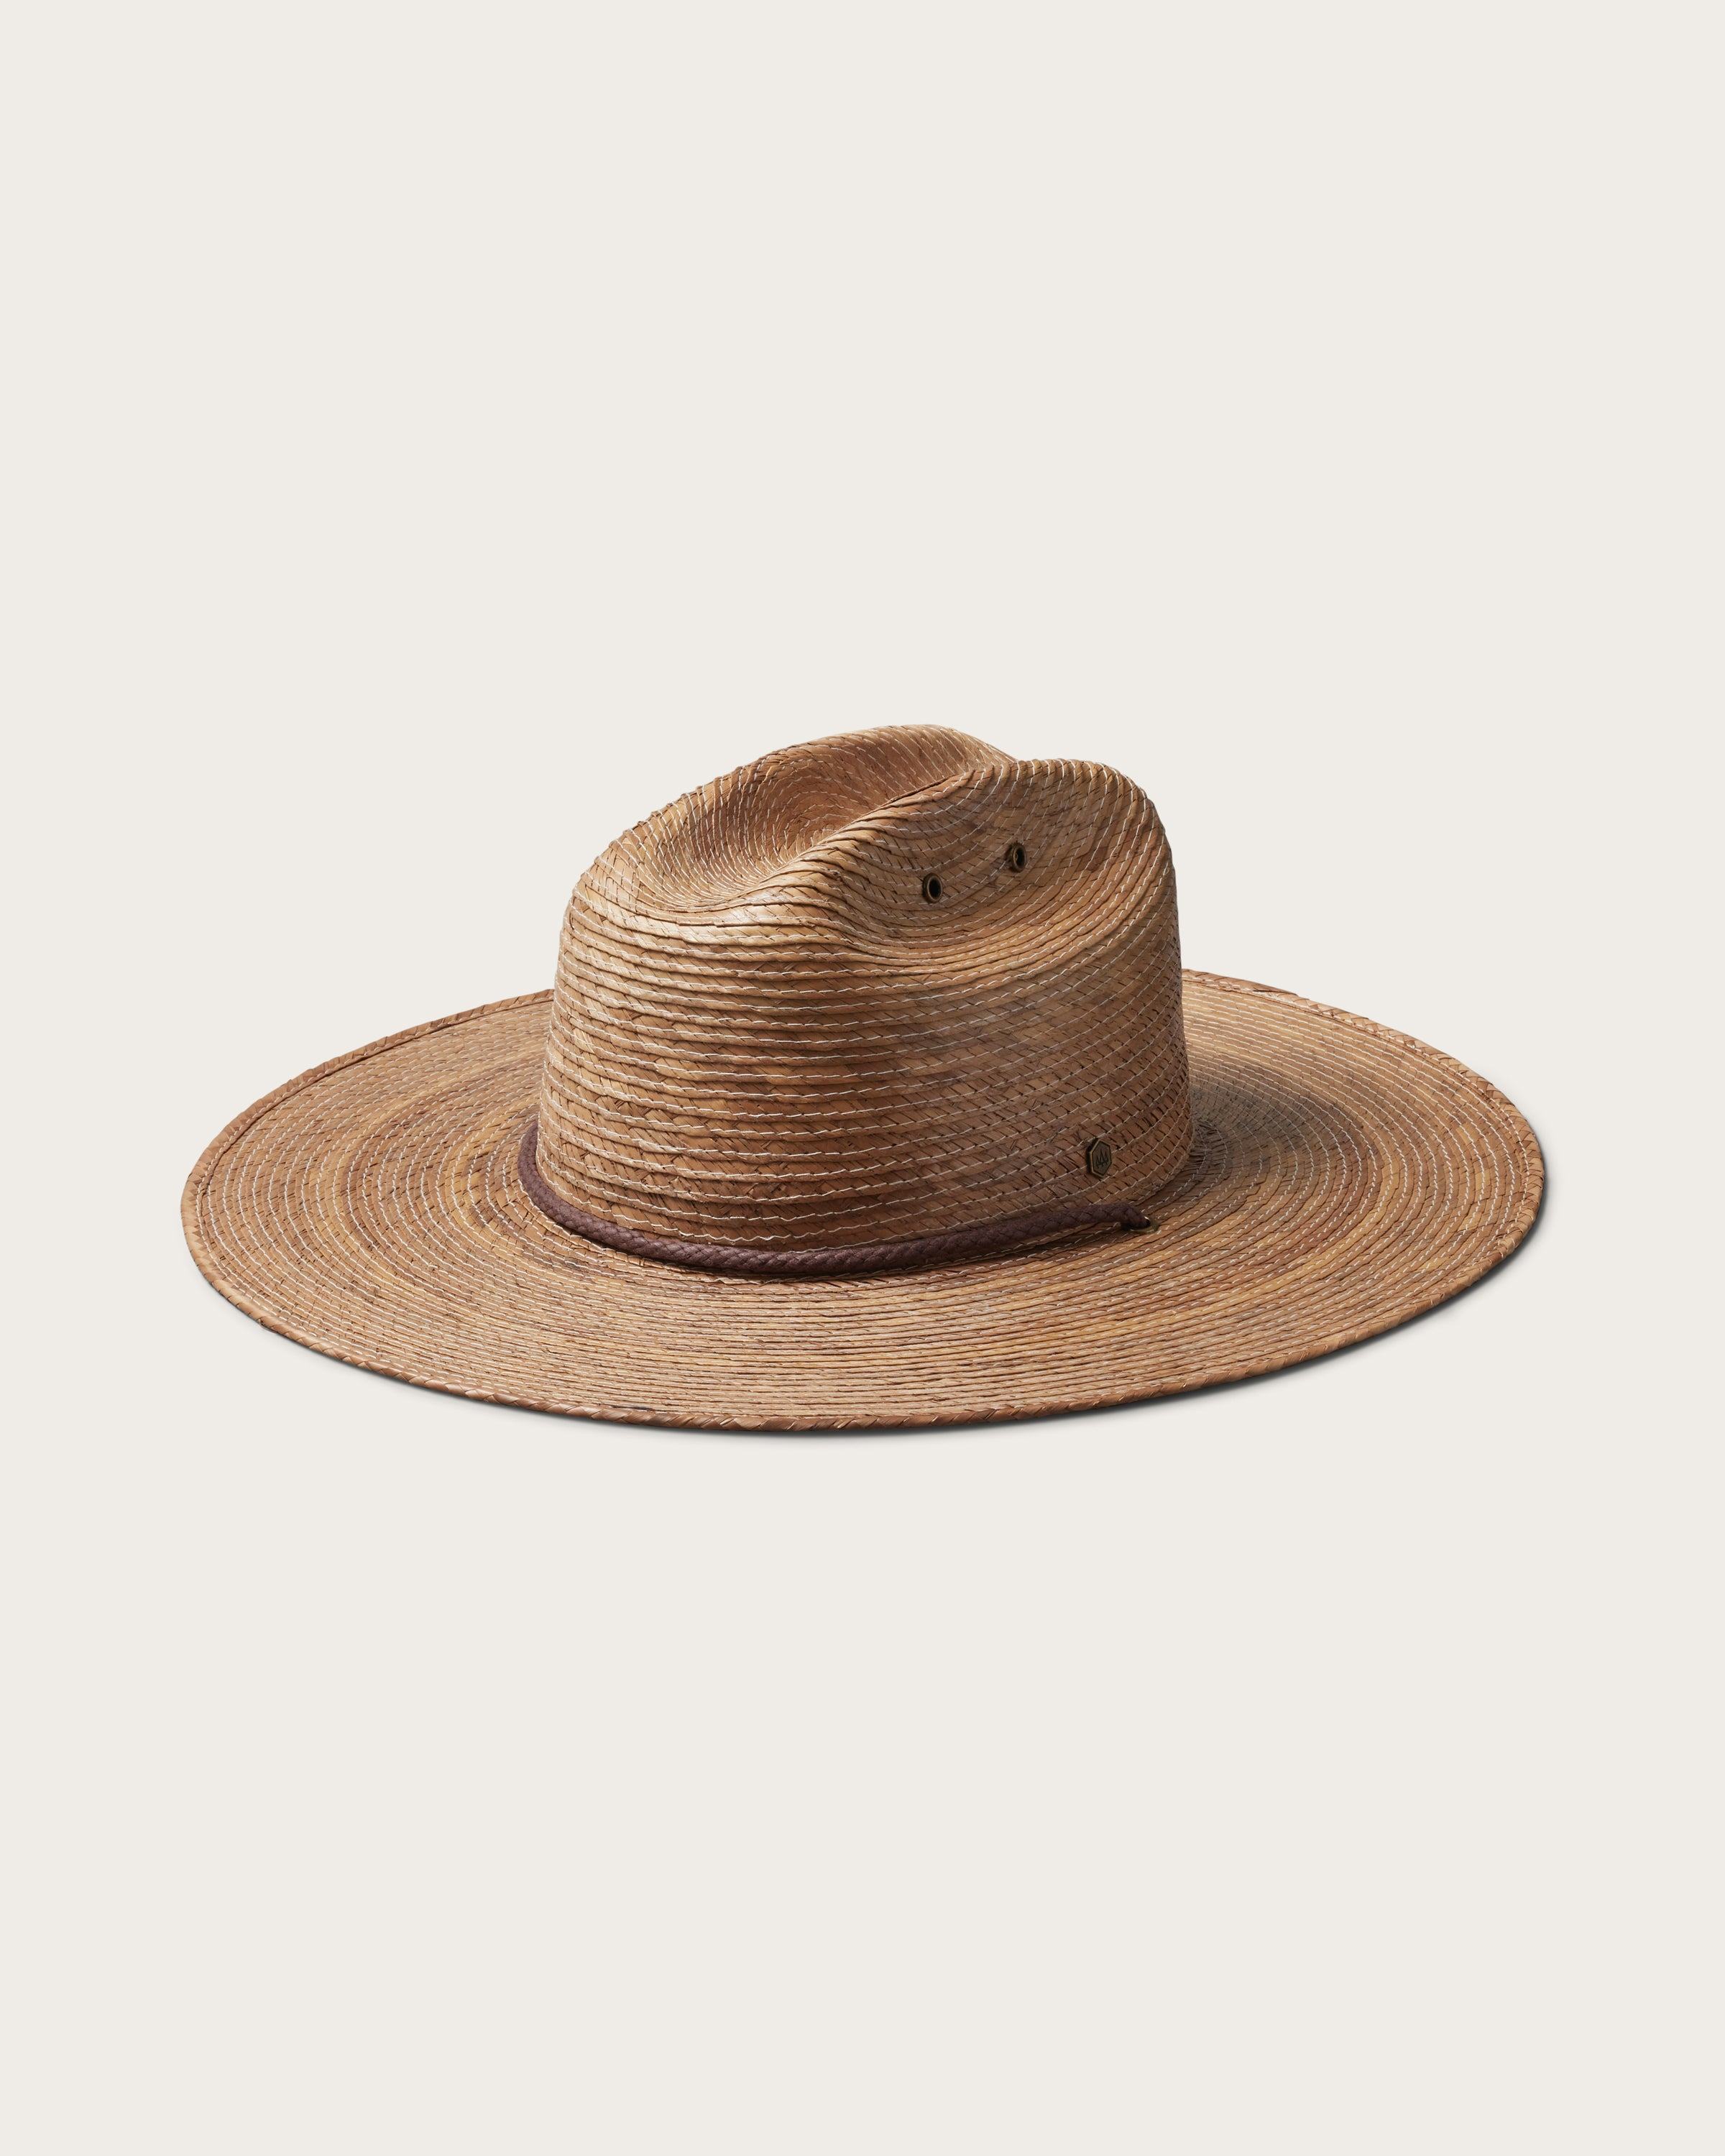 Monterrey in Toast - undefined - Hemlock Hat Co. Premium